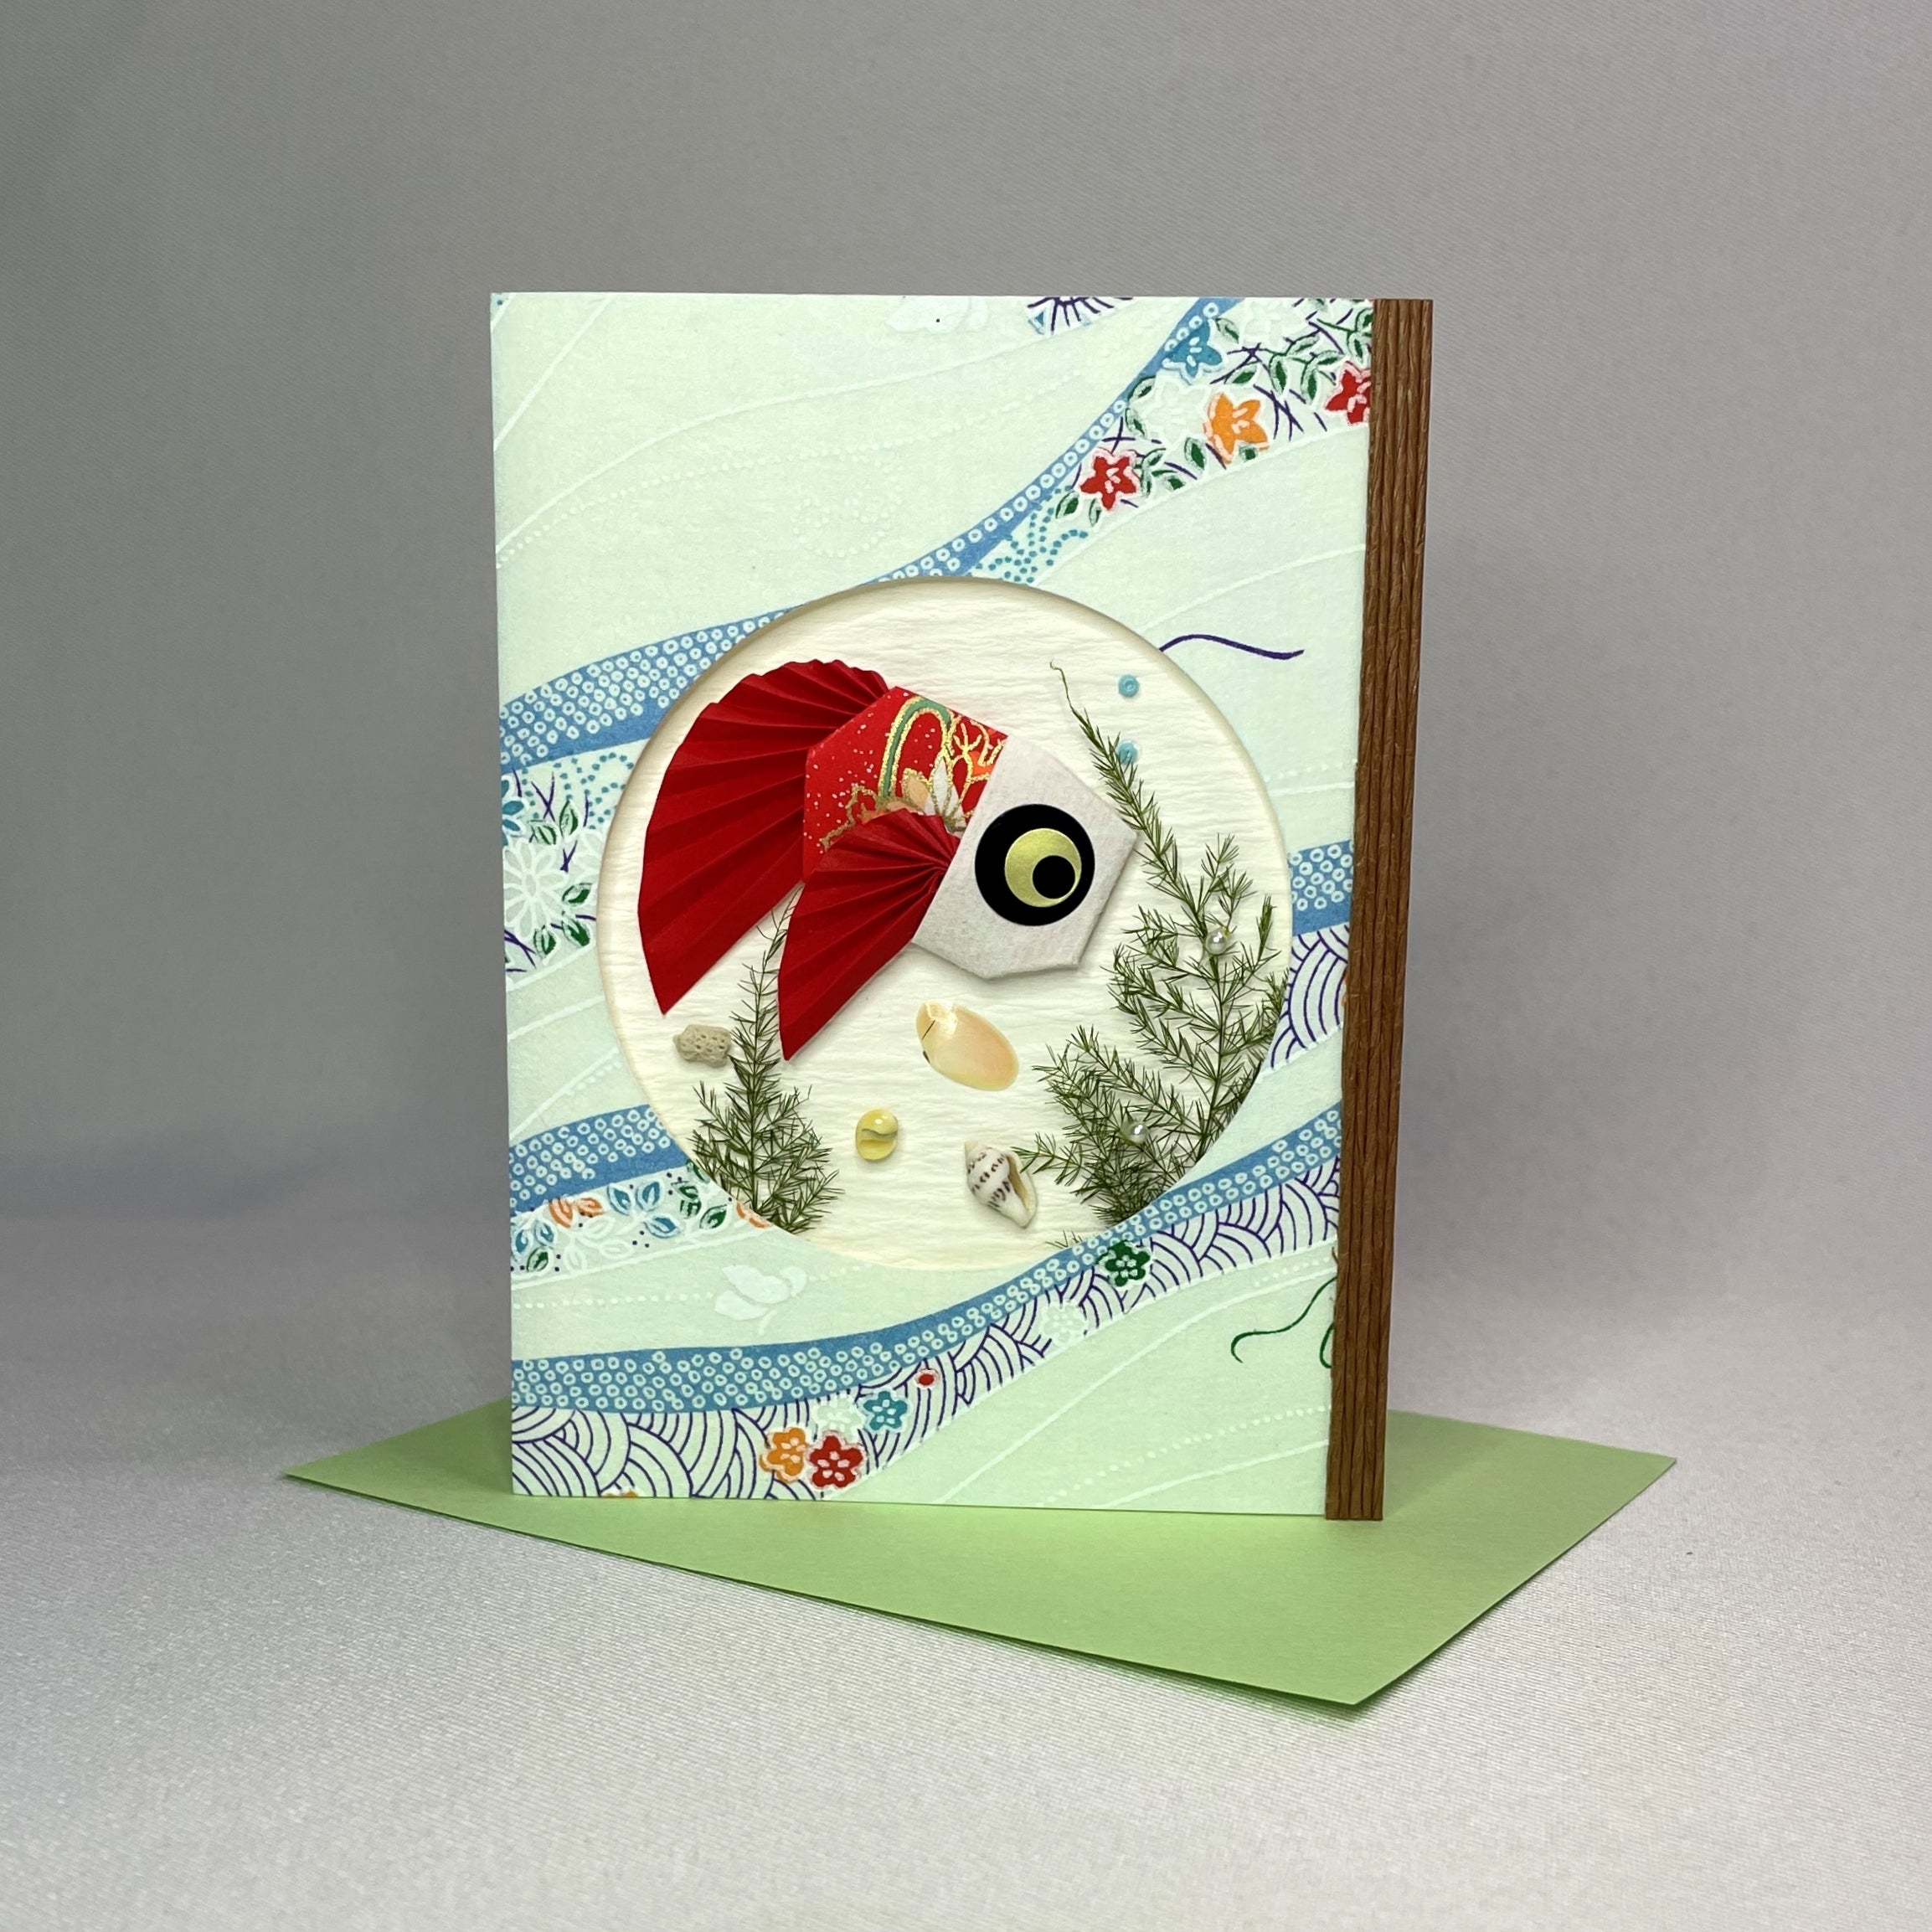 Handmade Greeting Card "Redfish"